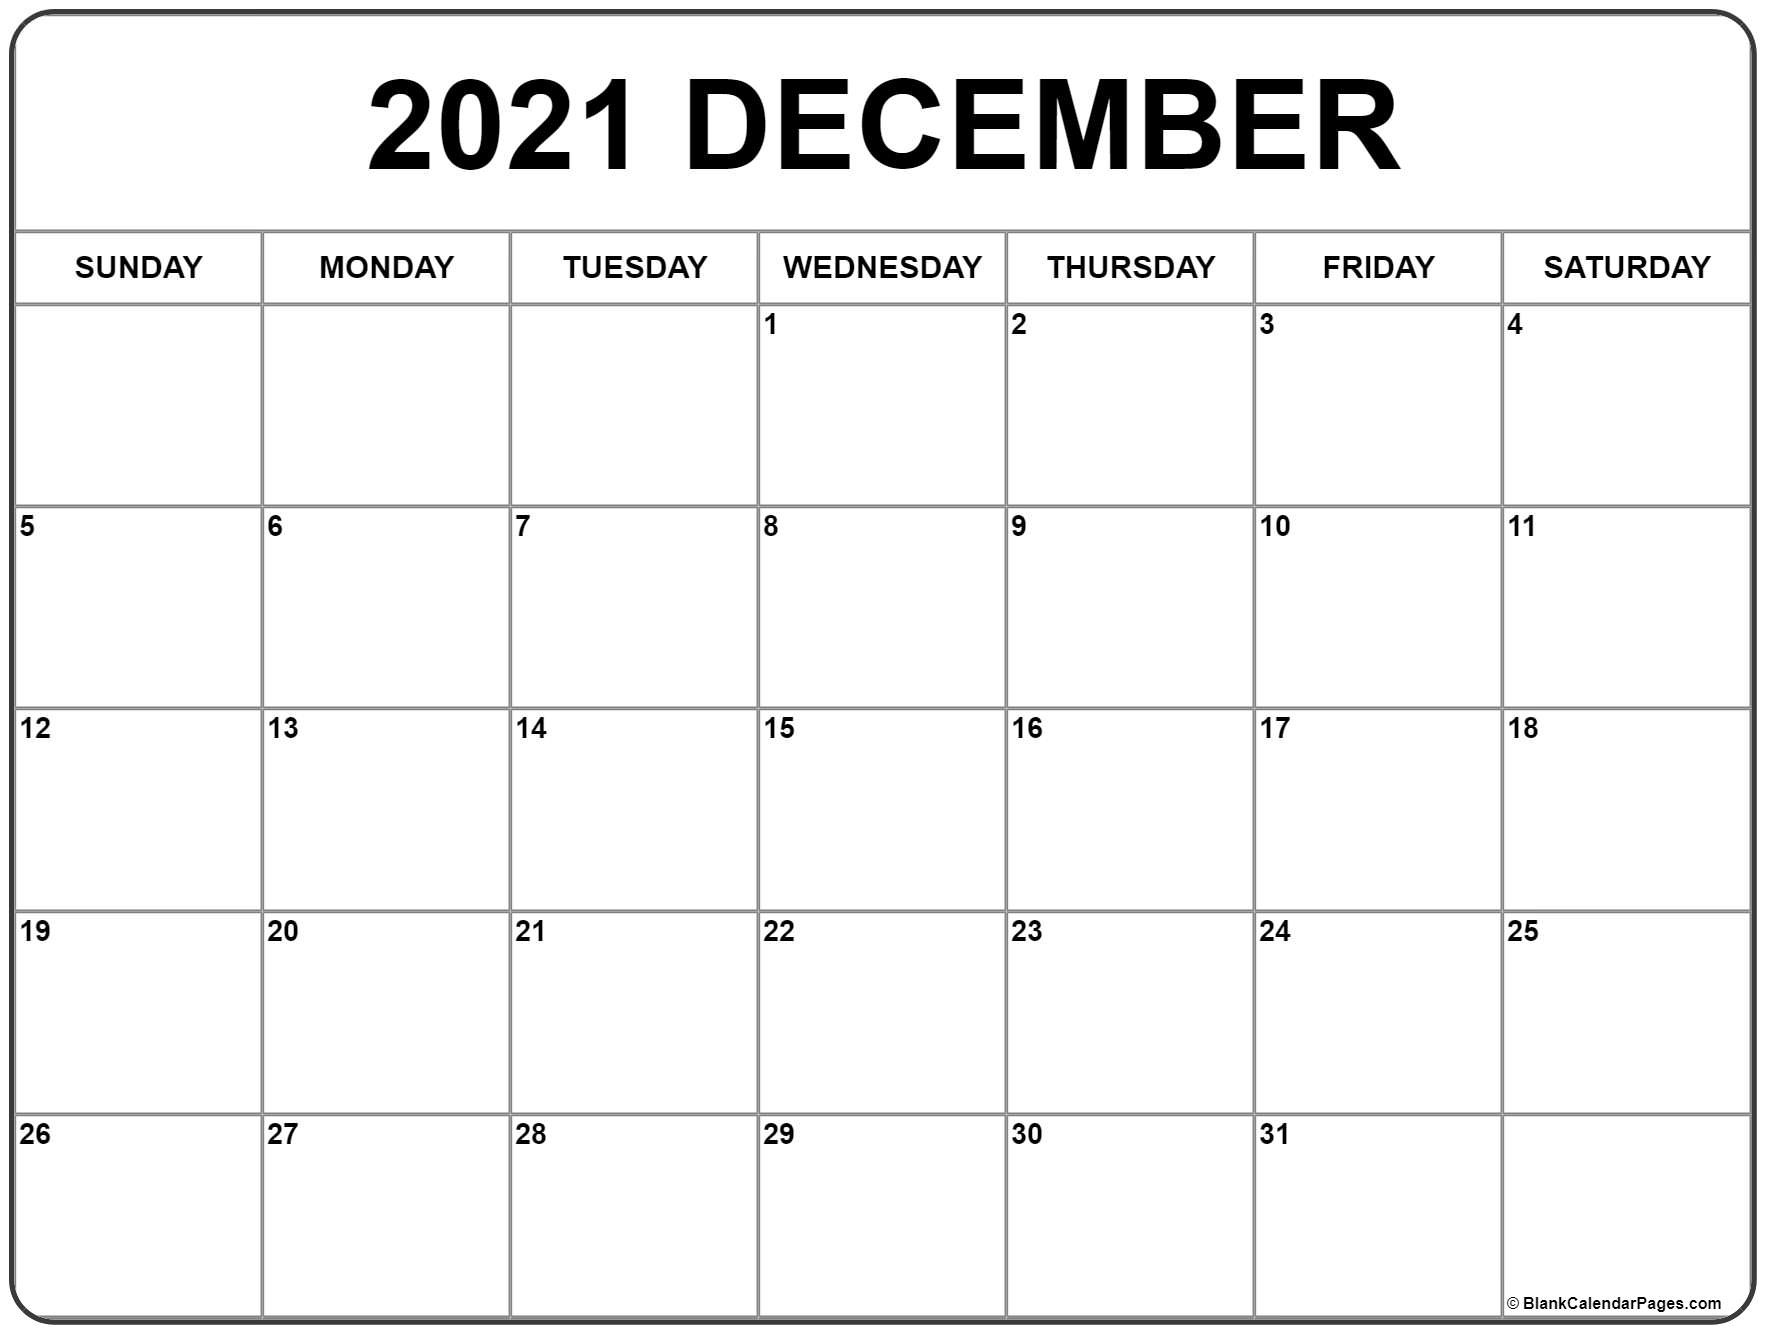 December 2021 Calendar | Free Printable Monthly Calendars-August 2021 Printable Bill